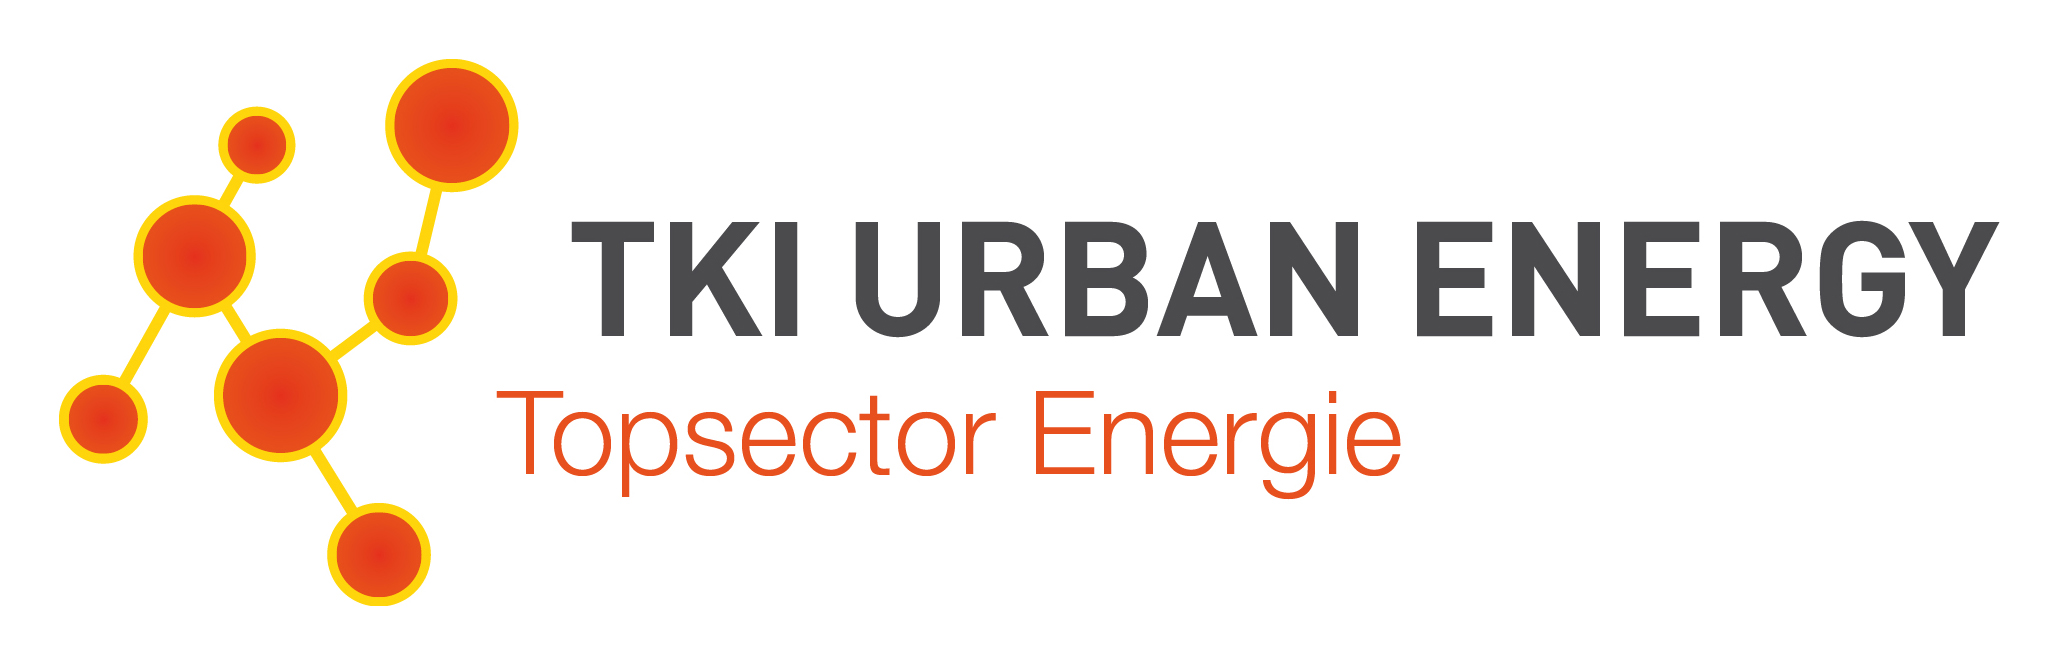 TSE Logo TKI Urban Energy.jpg